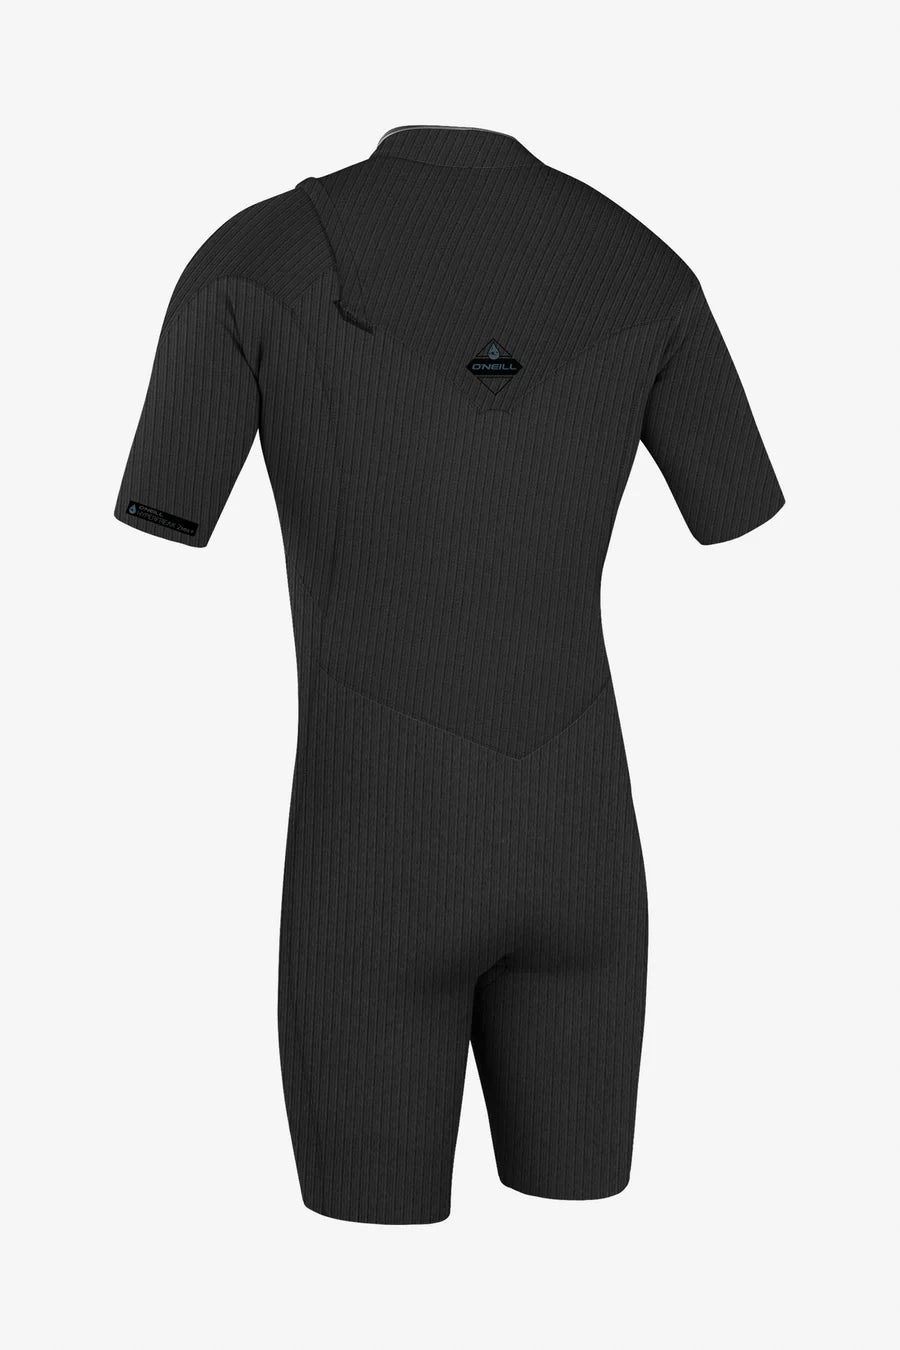 O'Neill Men's Hyperfreak Comp-X 2+mm Zipless S/S Spring Suit